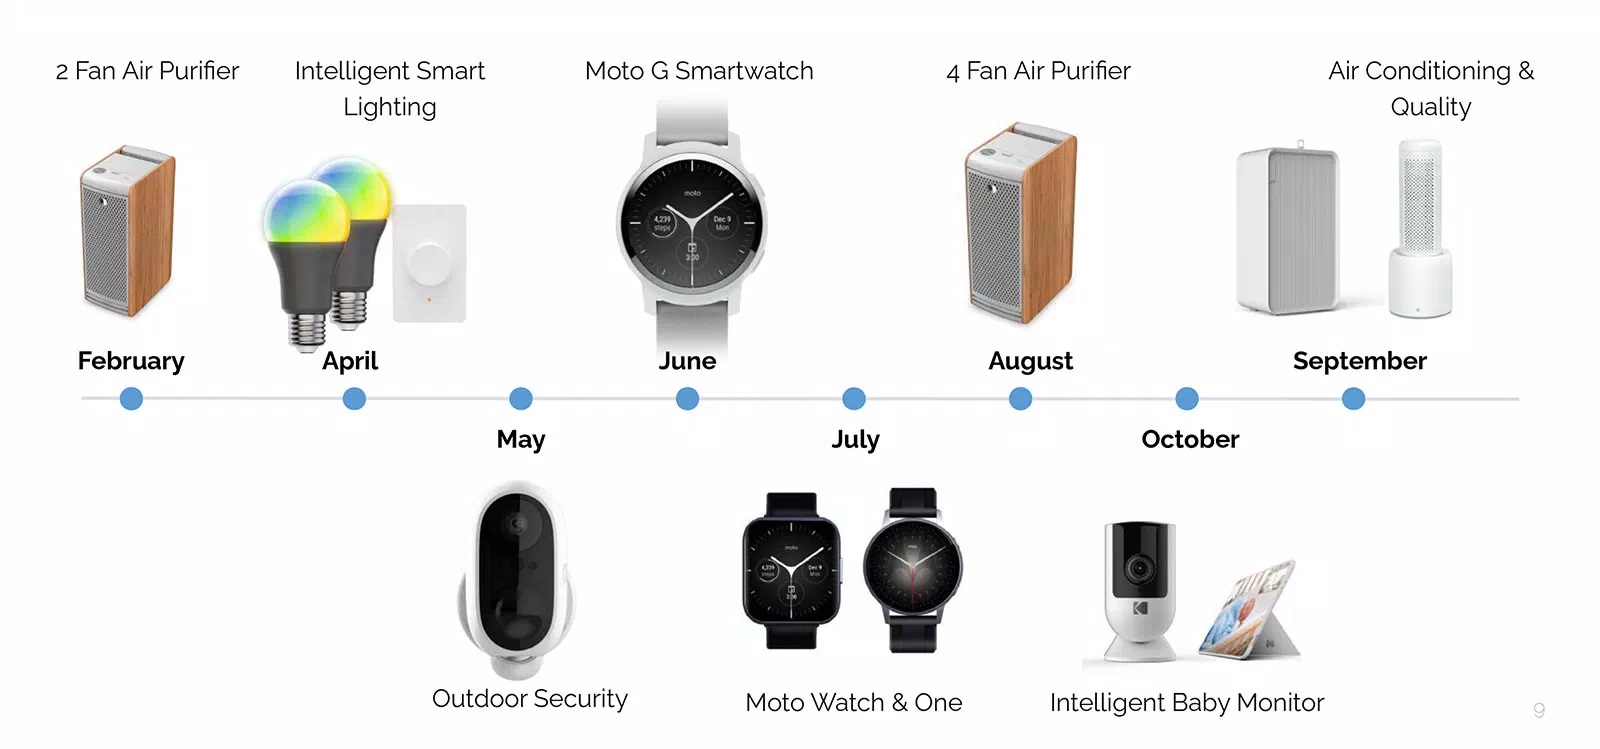 Moto smartwatches from CE Brands' investor presentation